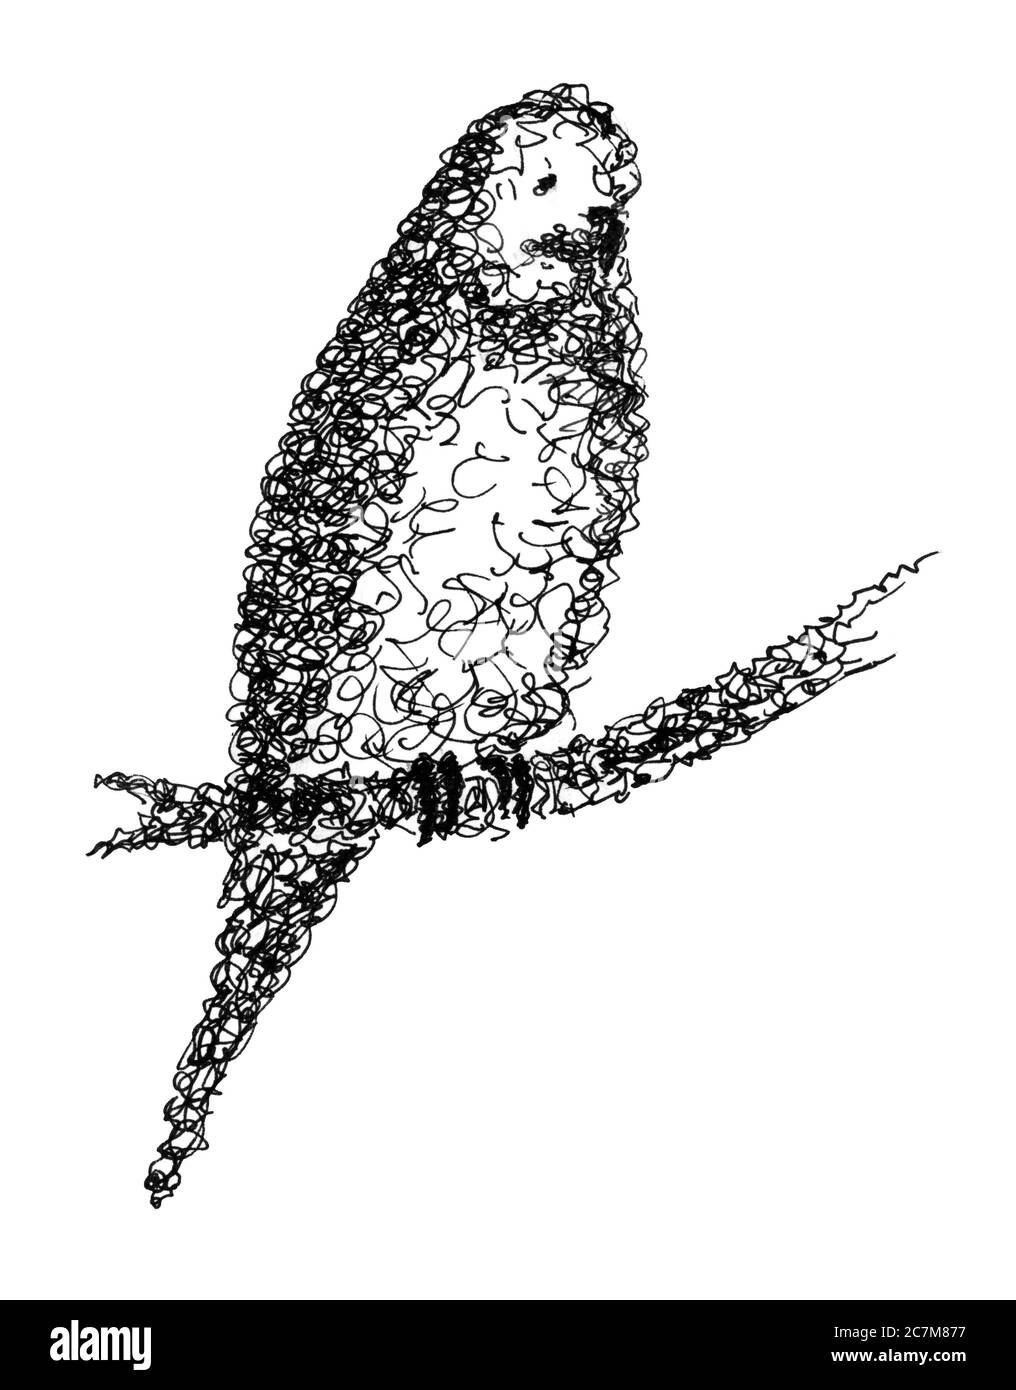 ink drawing of a pet bird Stock Photo